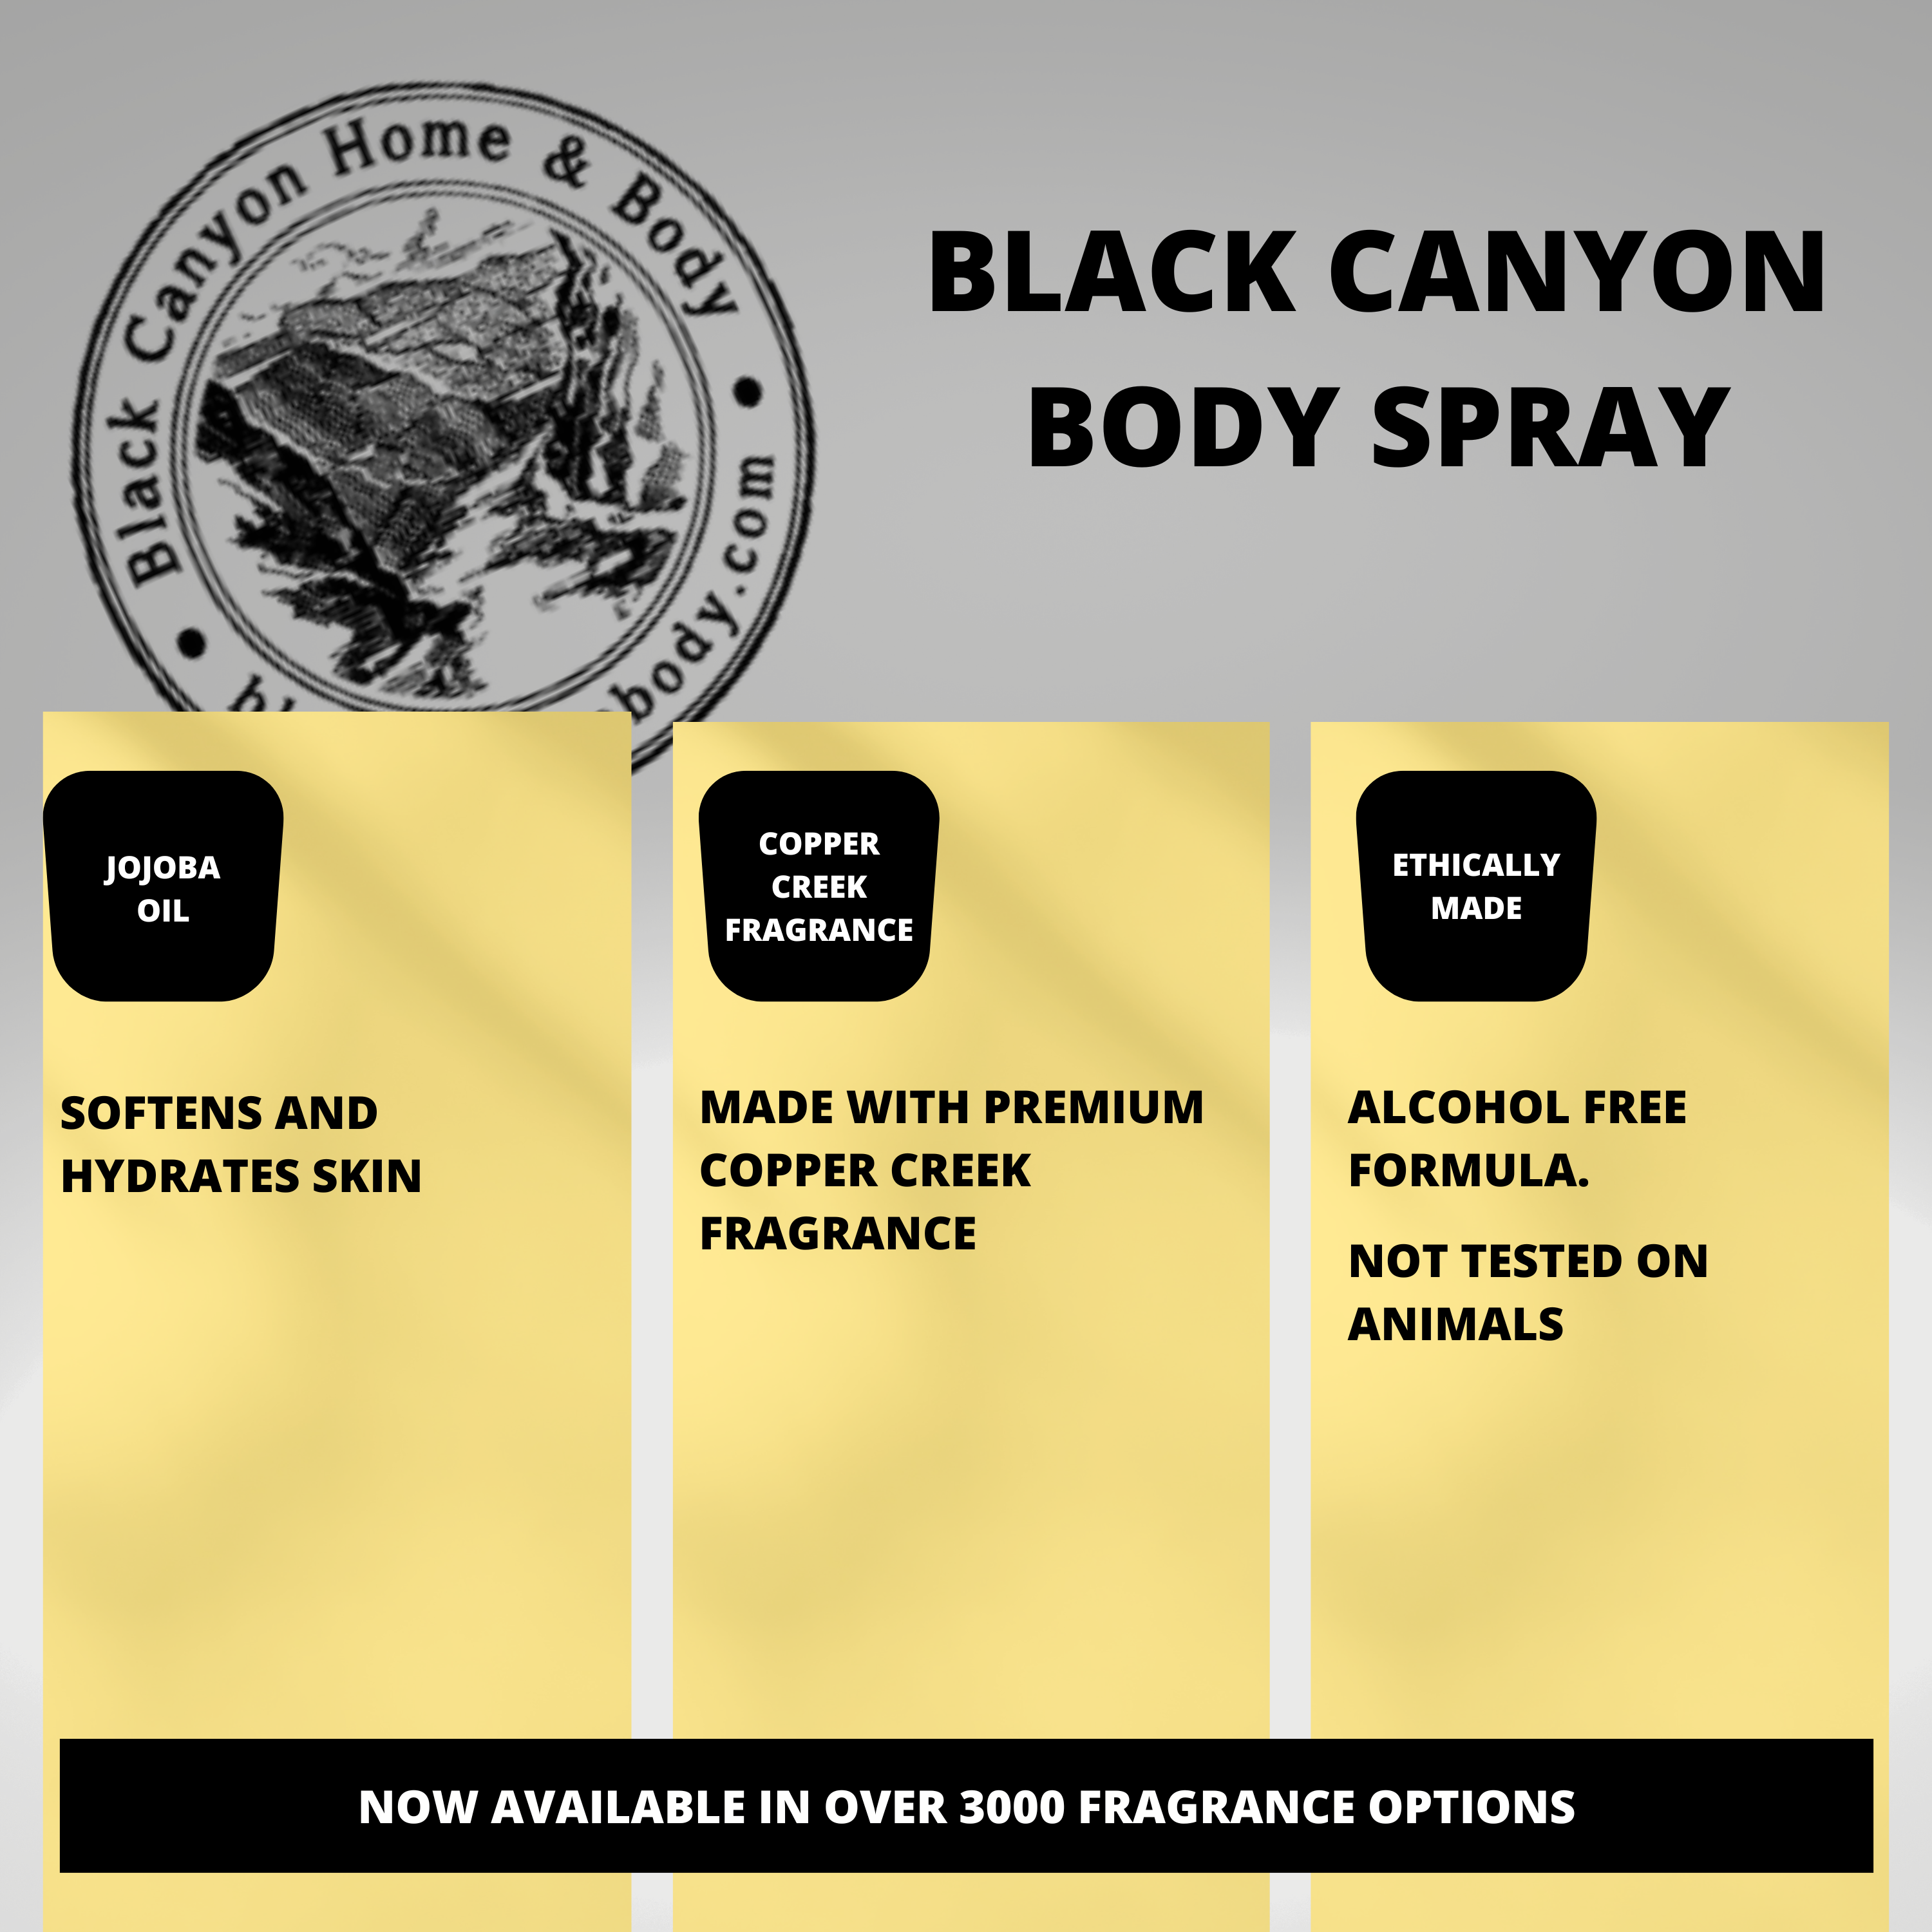 Black Canyon Honeydew Melon Scented Body Spray